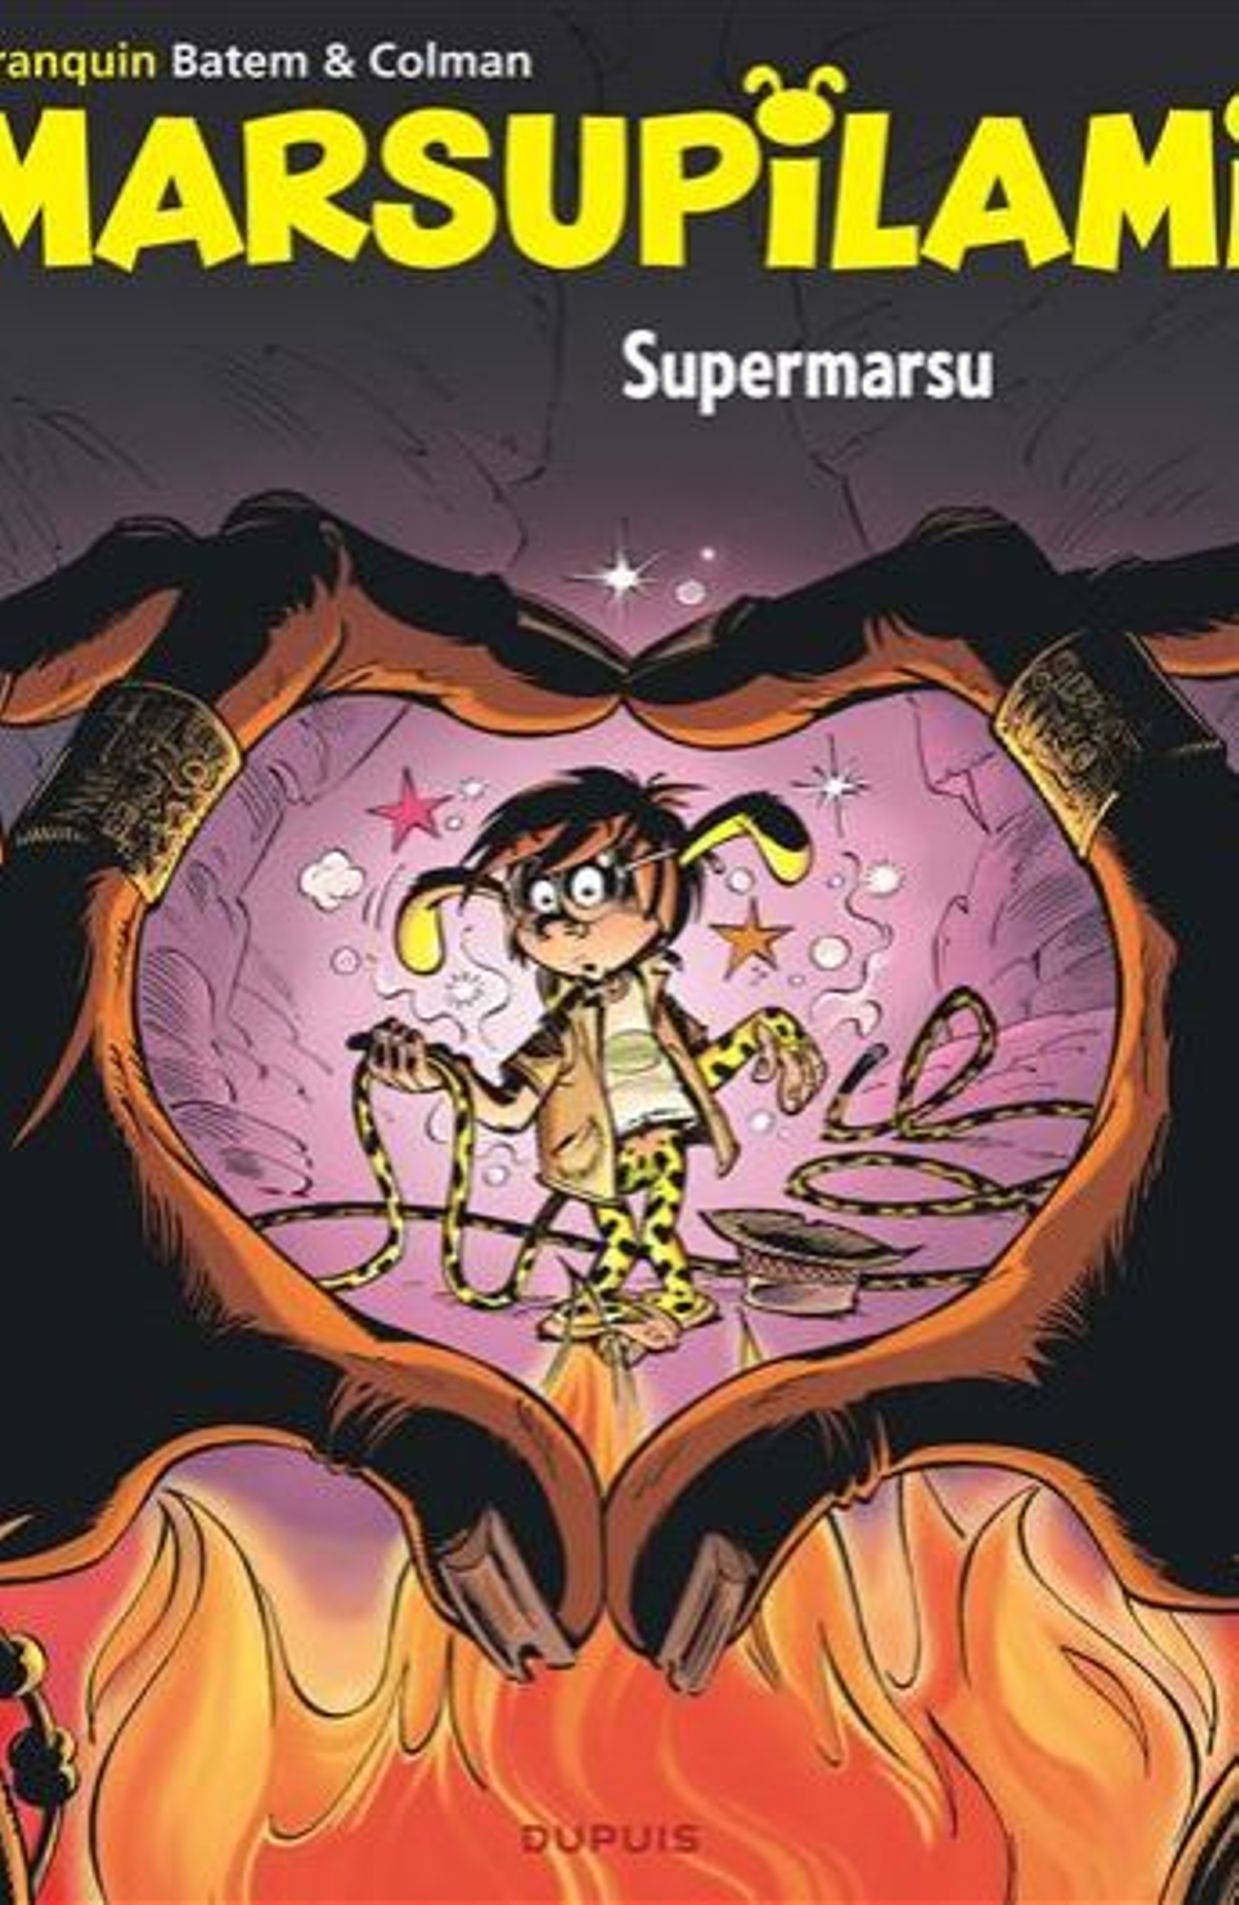 "Supermarsu", le tome 33 des aventures du Marsupilami. 